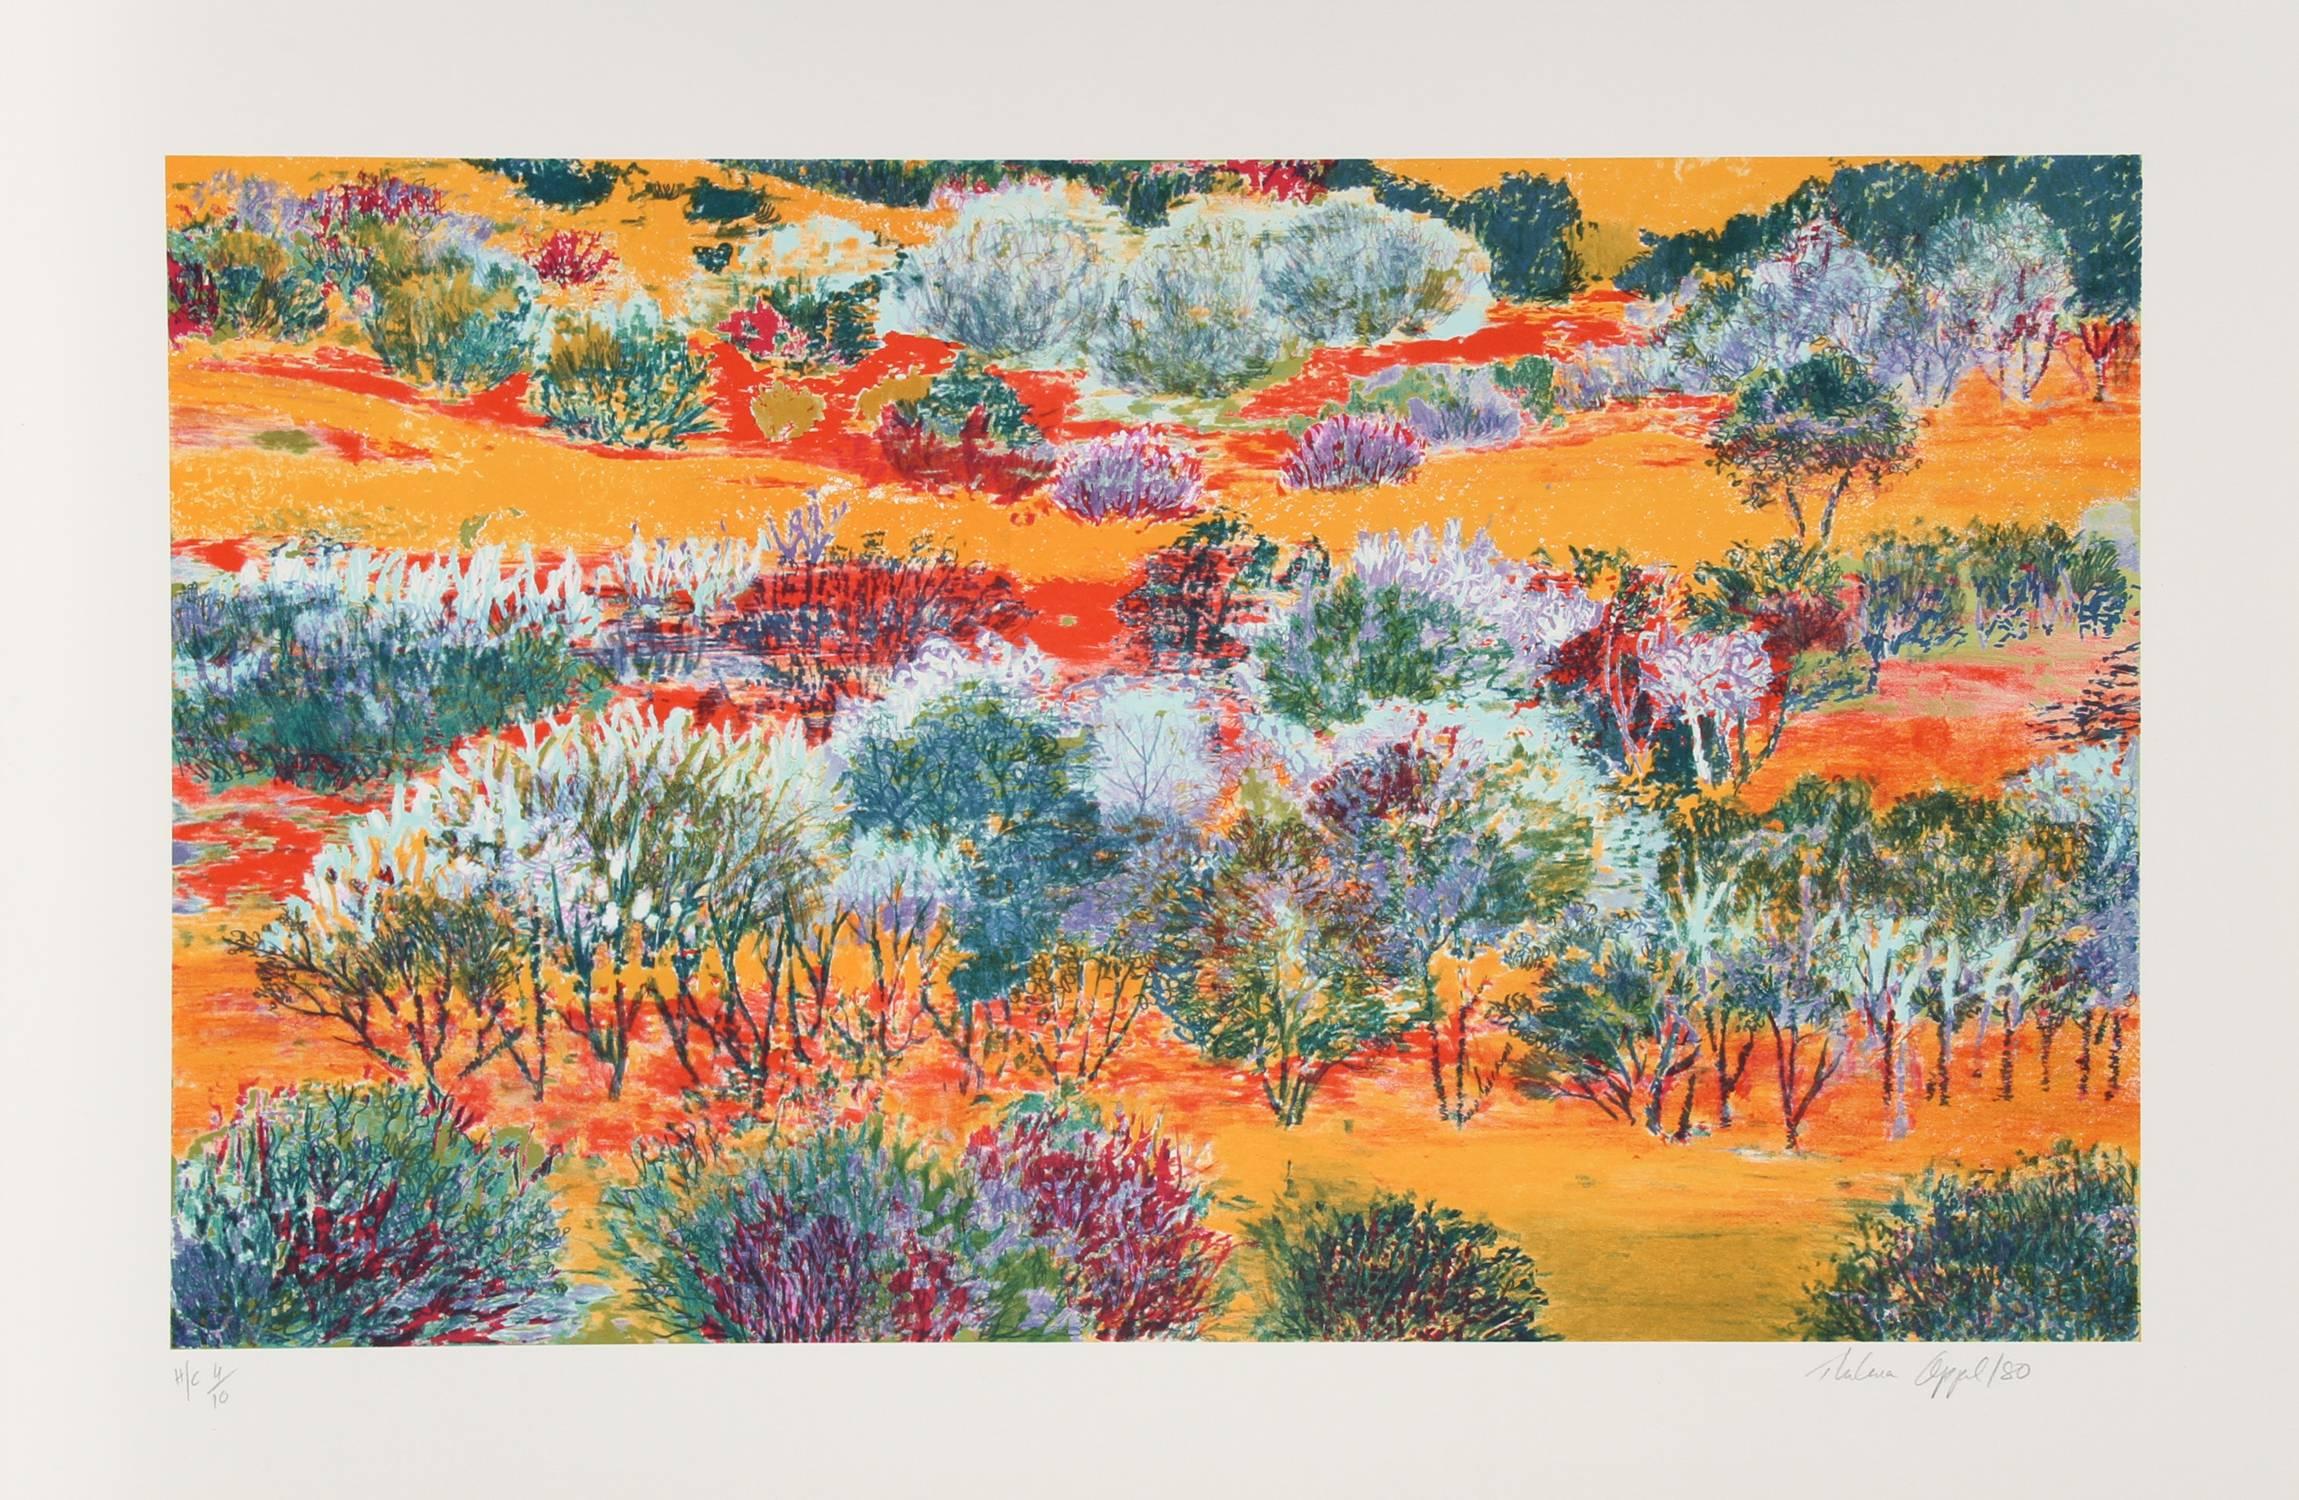 Thelma Appel Landscape Print – Waloomsac Wood II